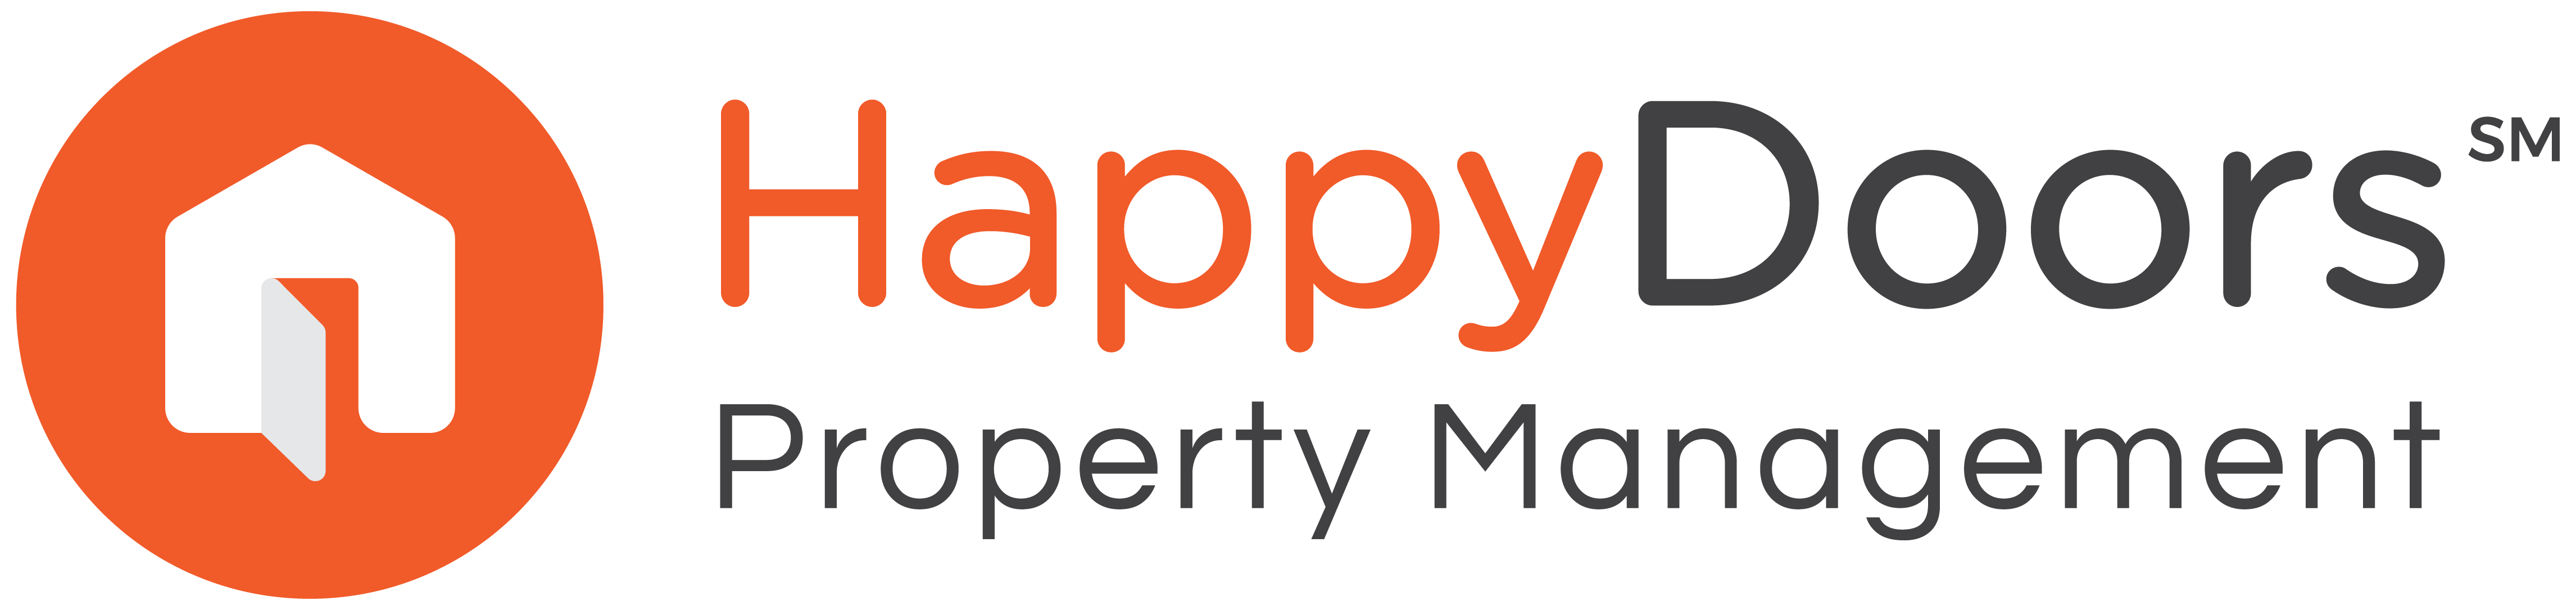 Happy Doors Property Management Logo